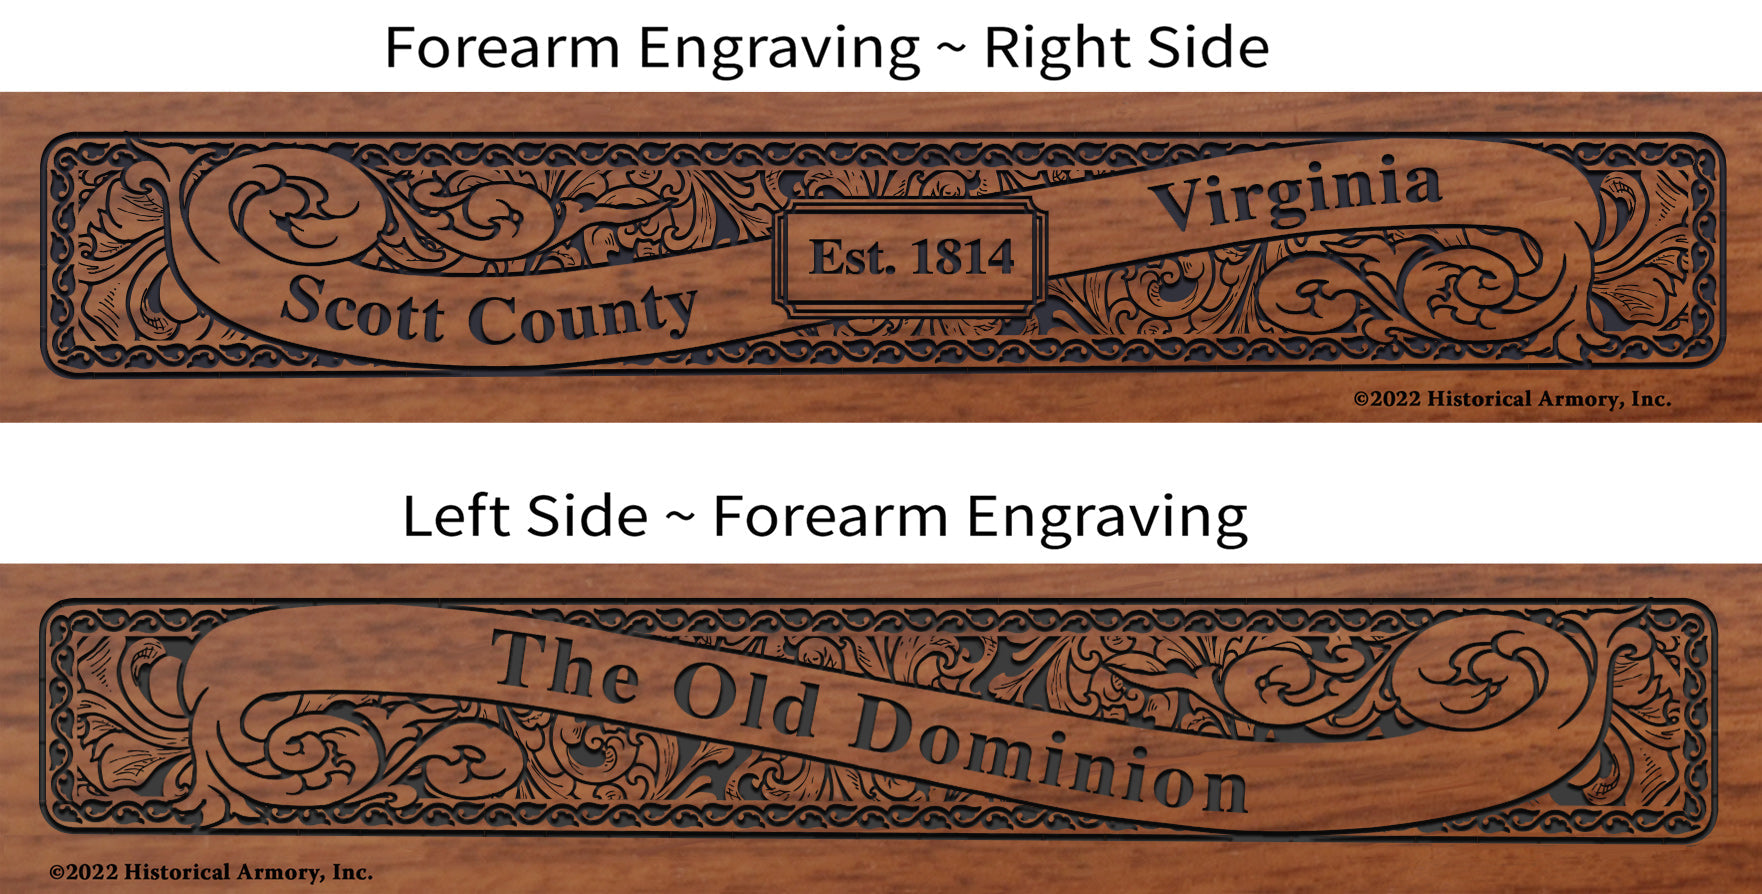 Scott County Virginia Engraved Rifle Forearm